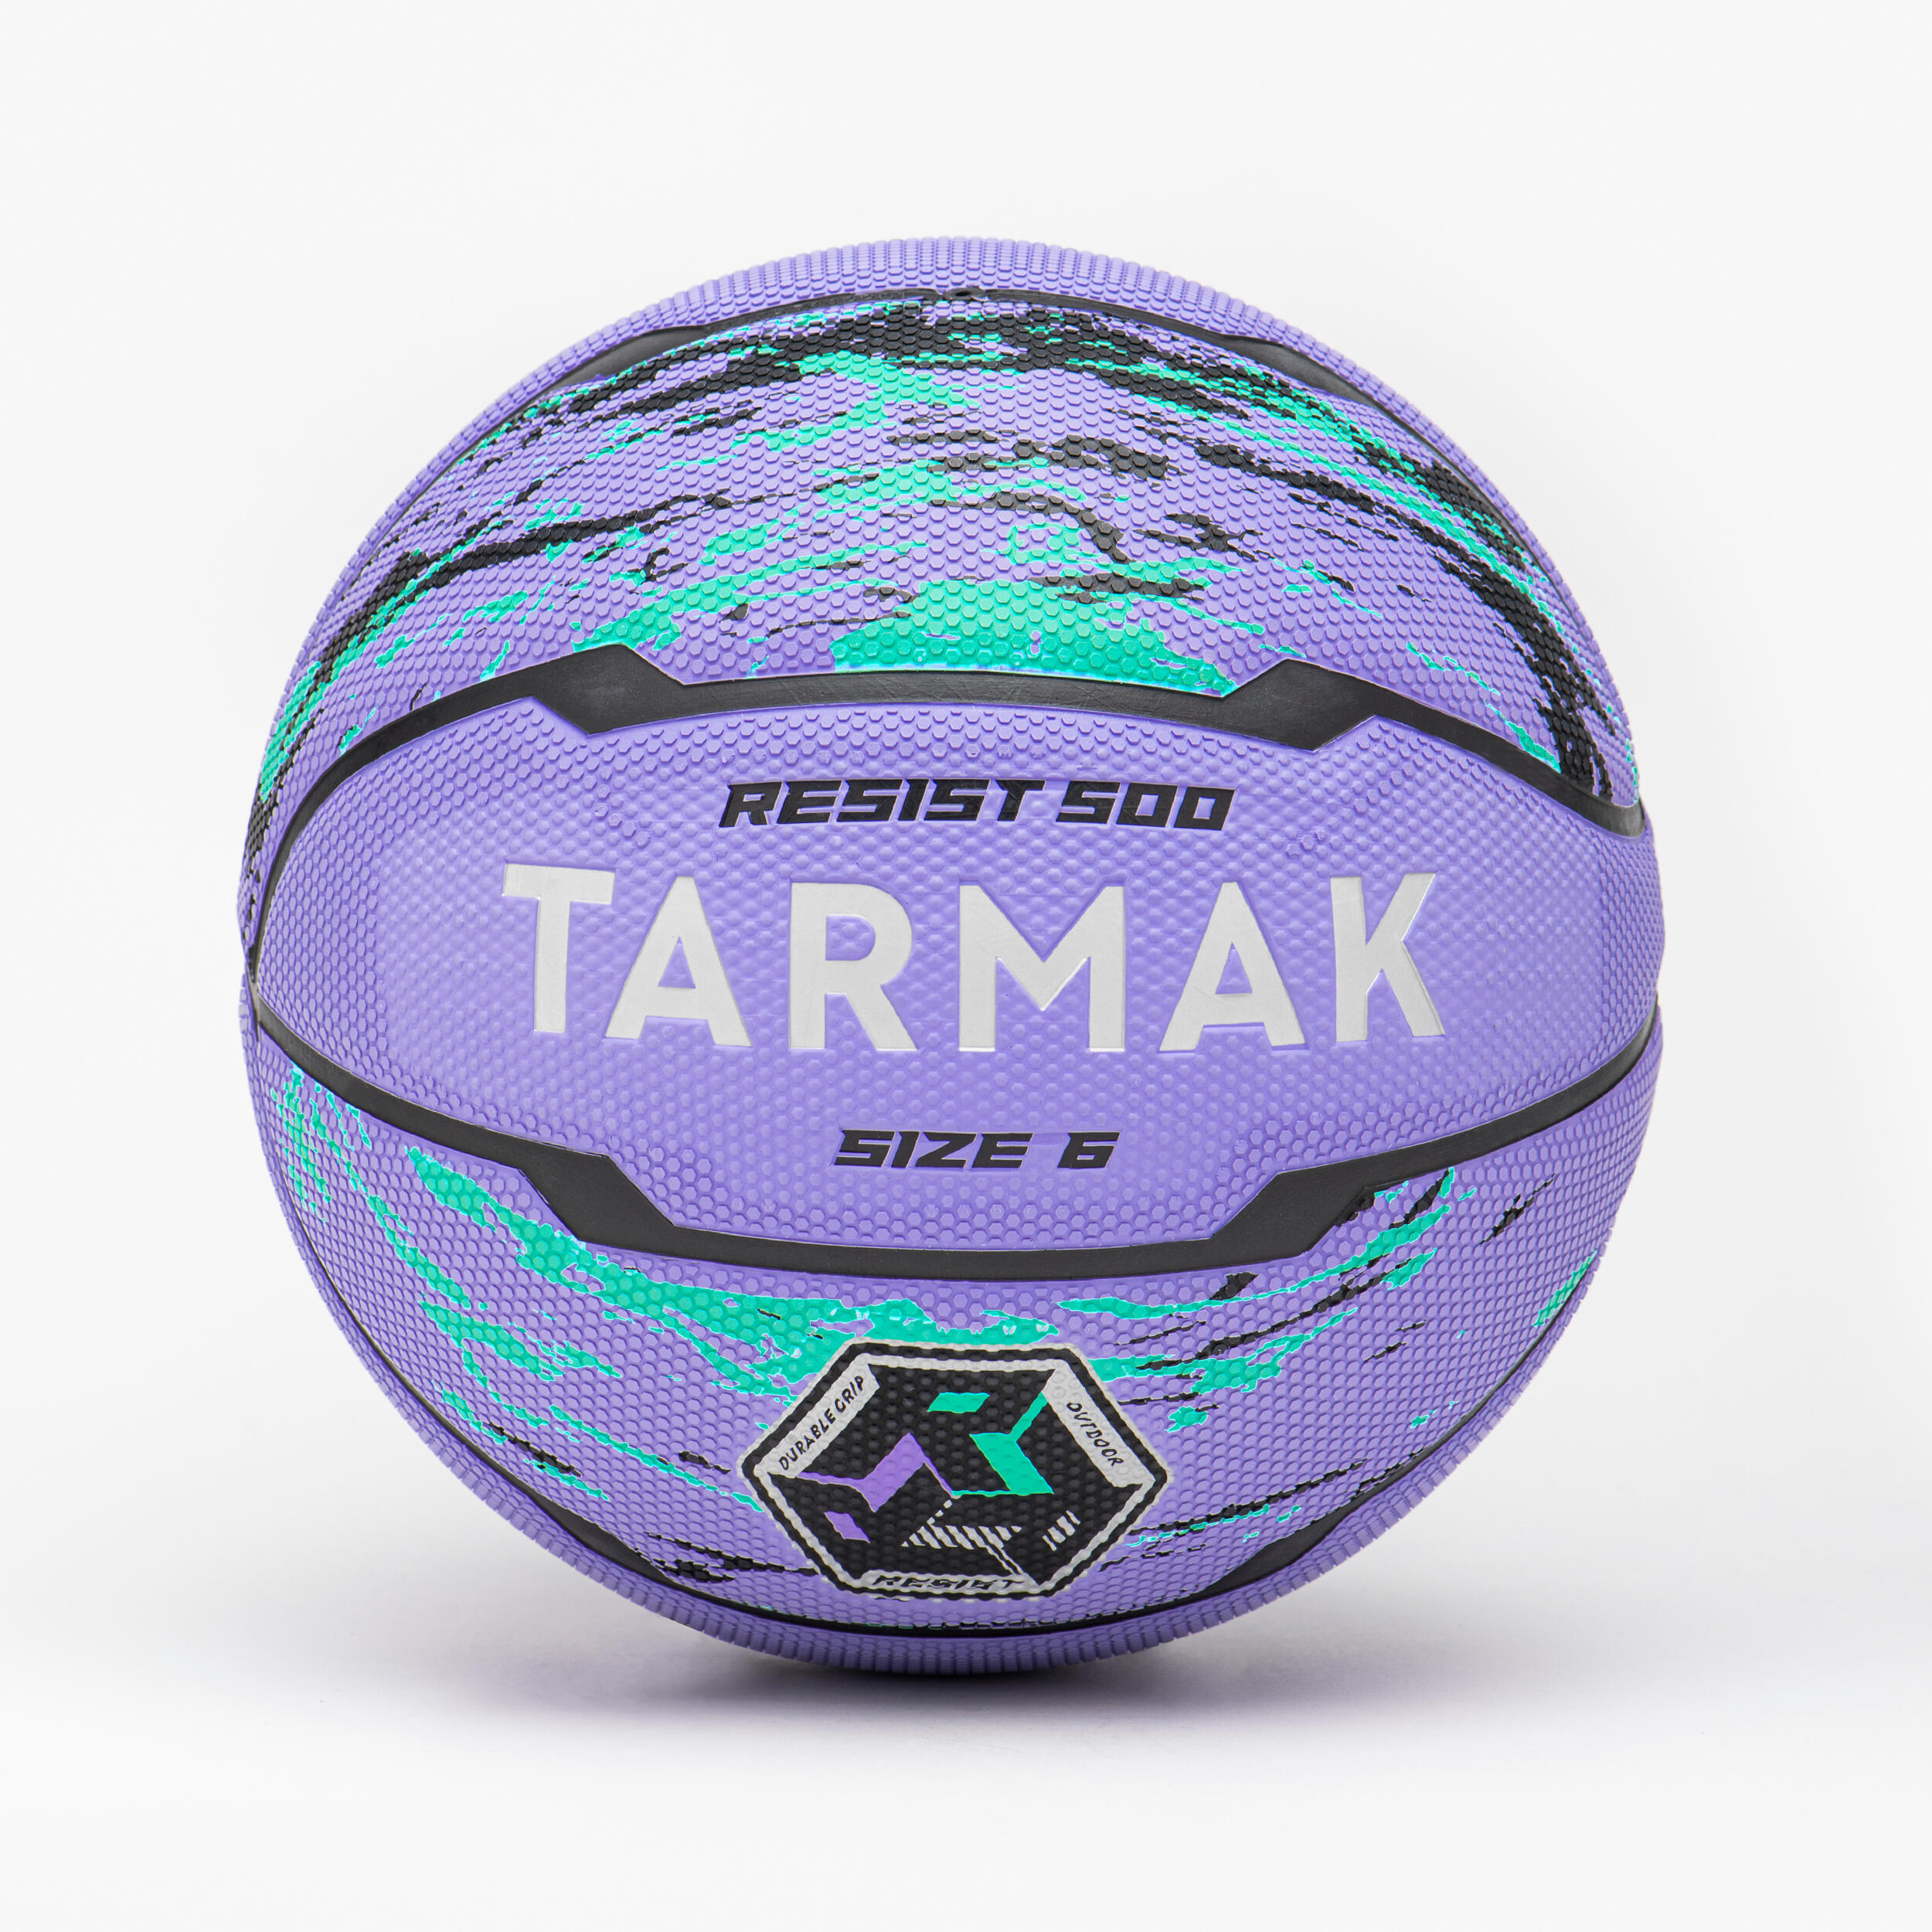 TARMAK Ballon De Basketball Taille 6 - R500 Violet Turquoise